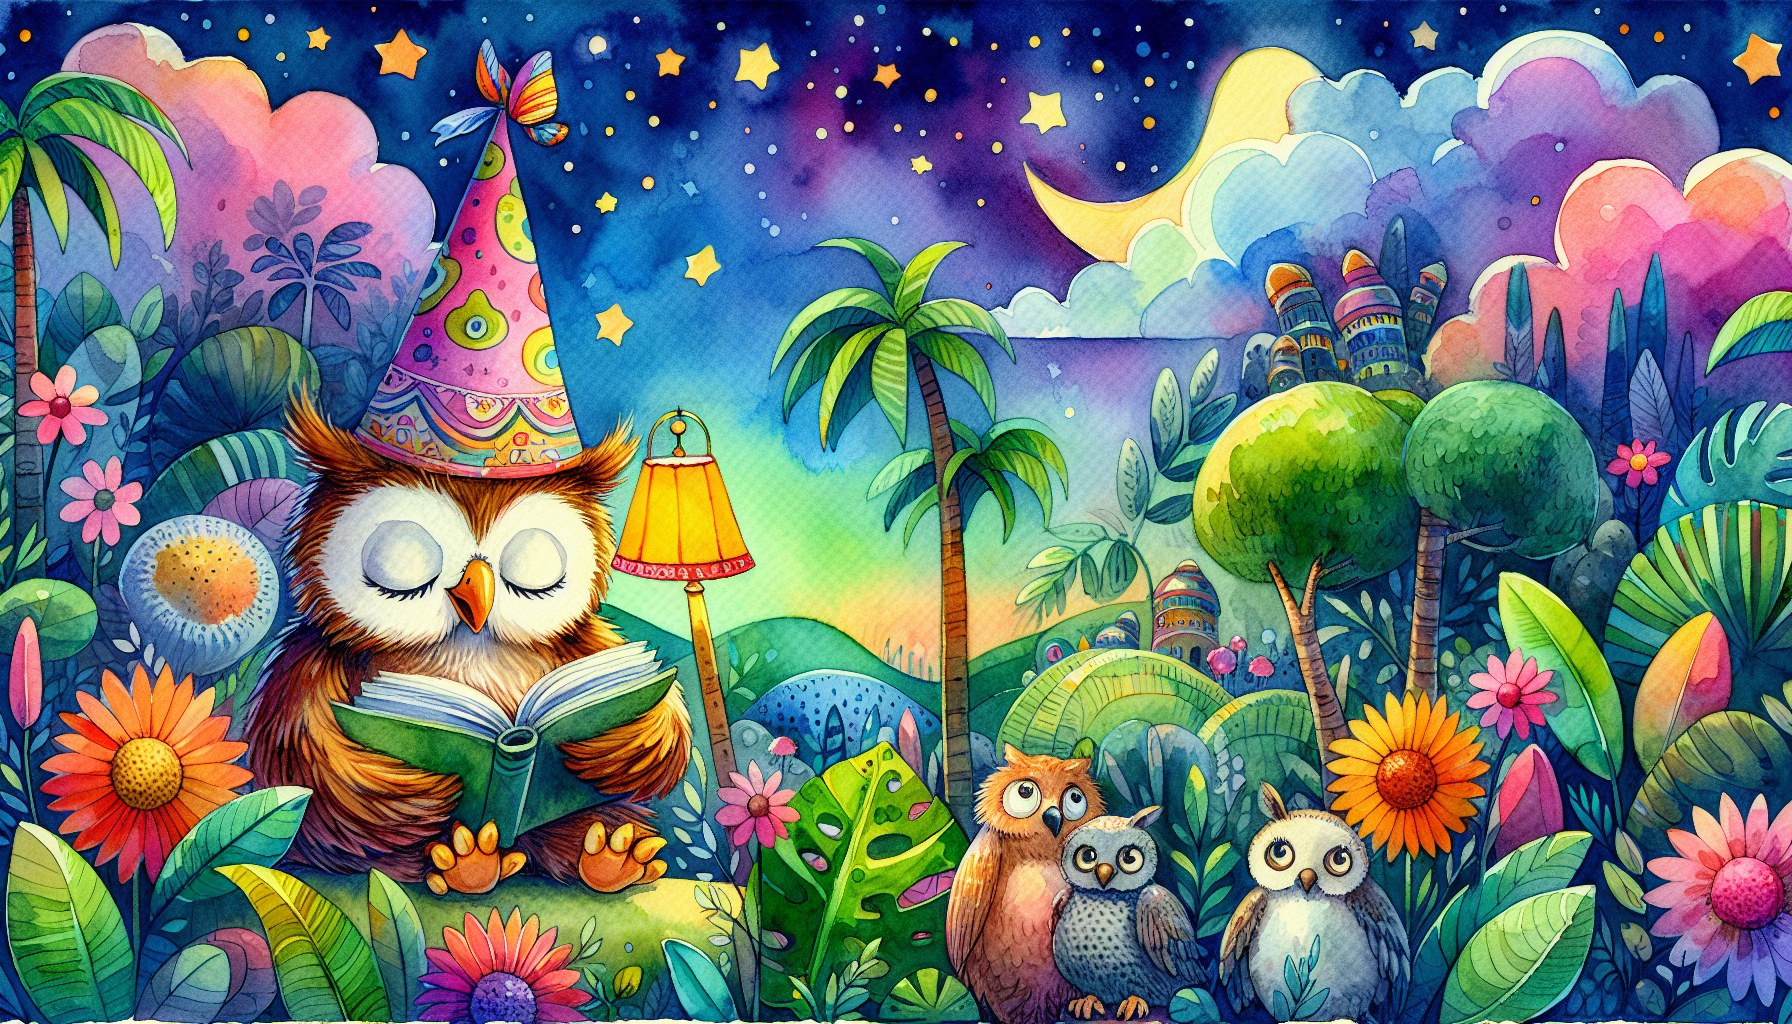 The Little Night Owls Big Adventure in Dreamland